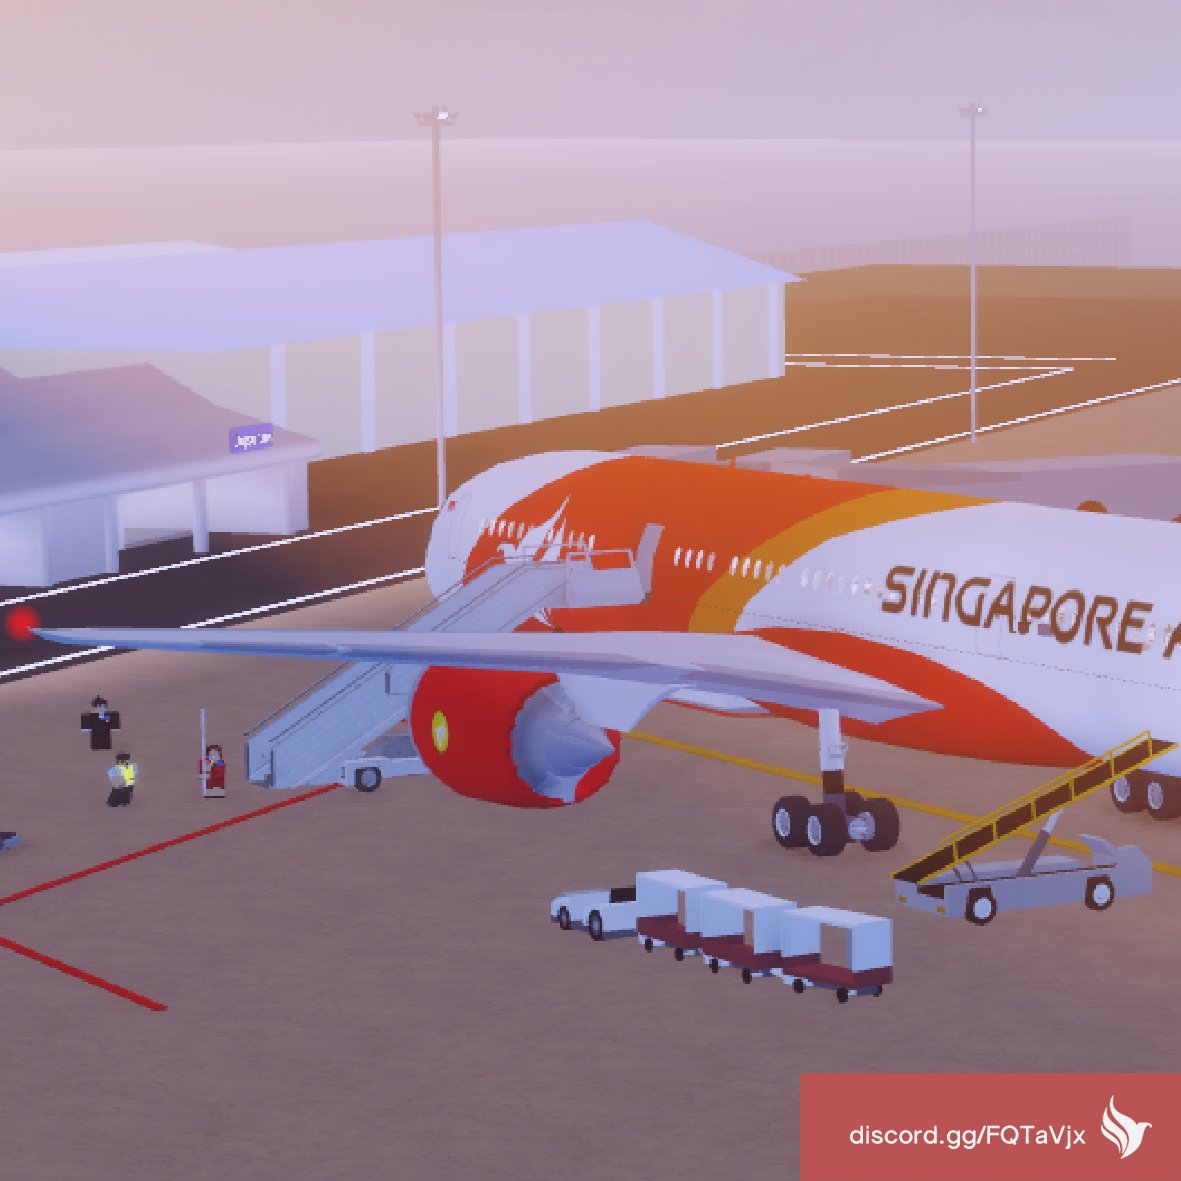 Singapore Air Roblox Ro Singaporeair Twitter - roblox singapore airlines on twitter we will be at